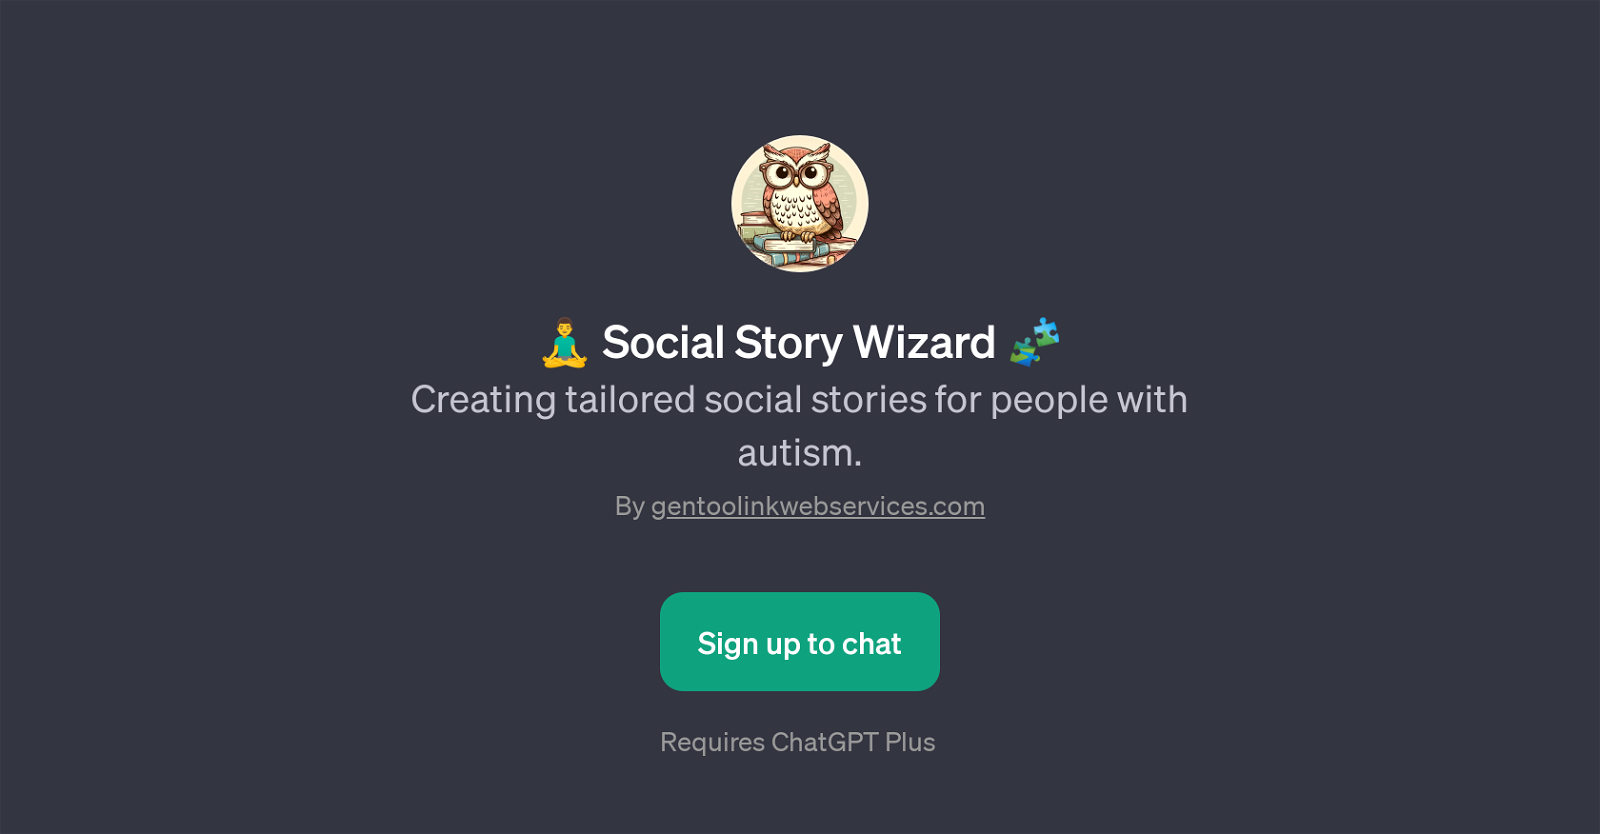 Social Story Wizard website